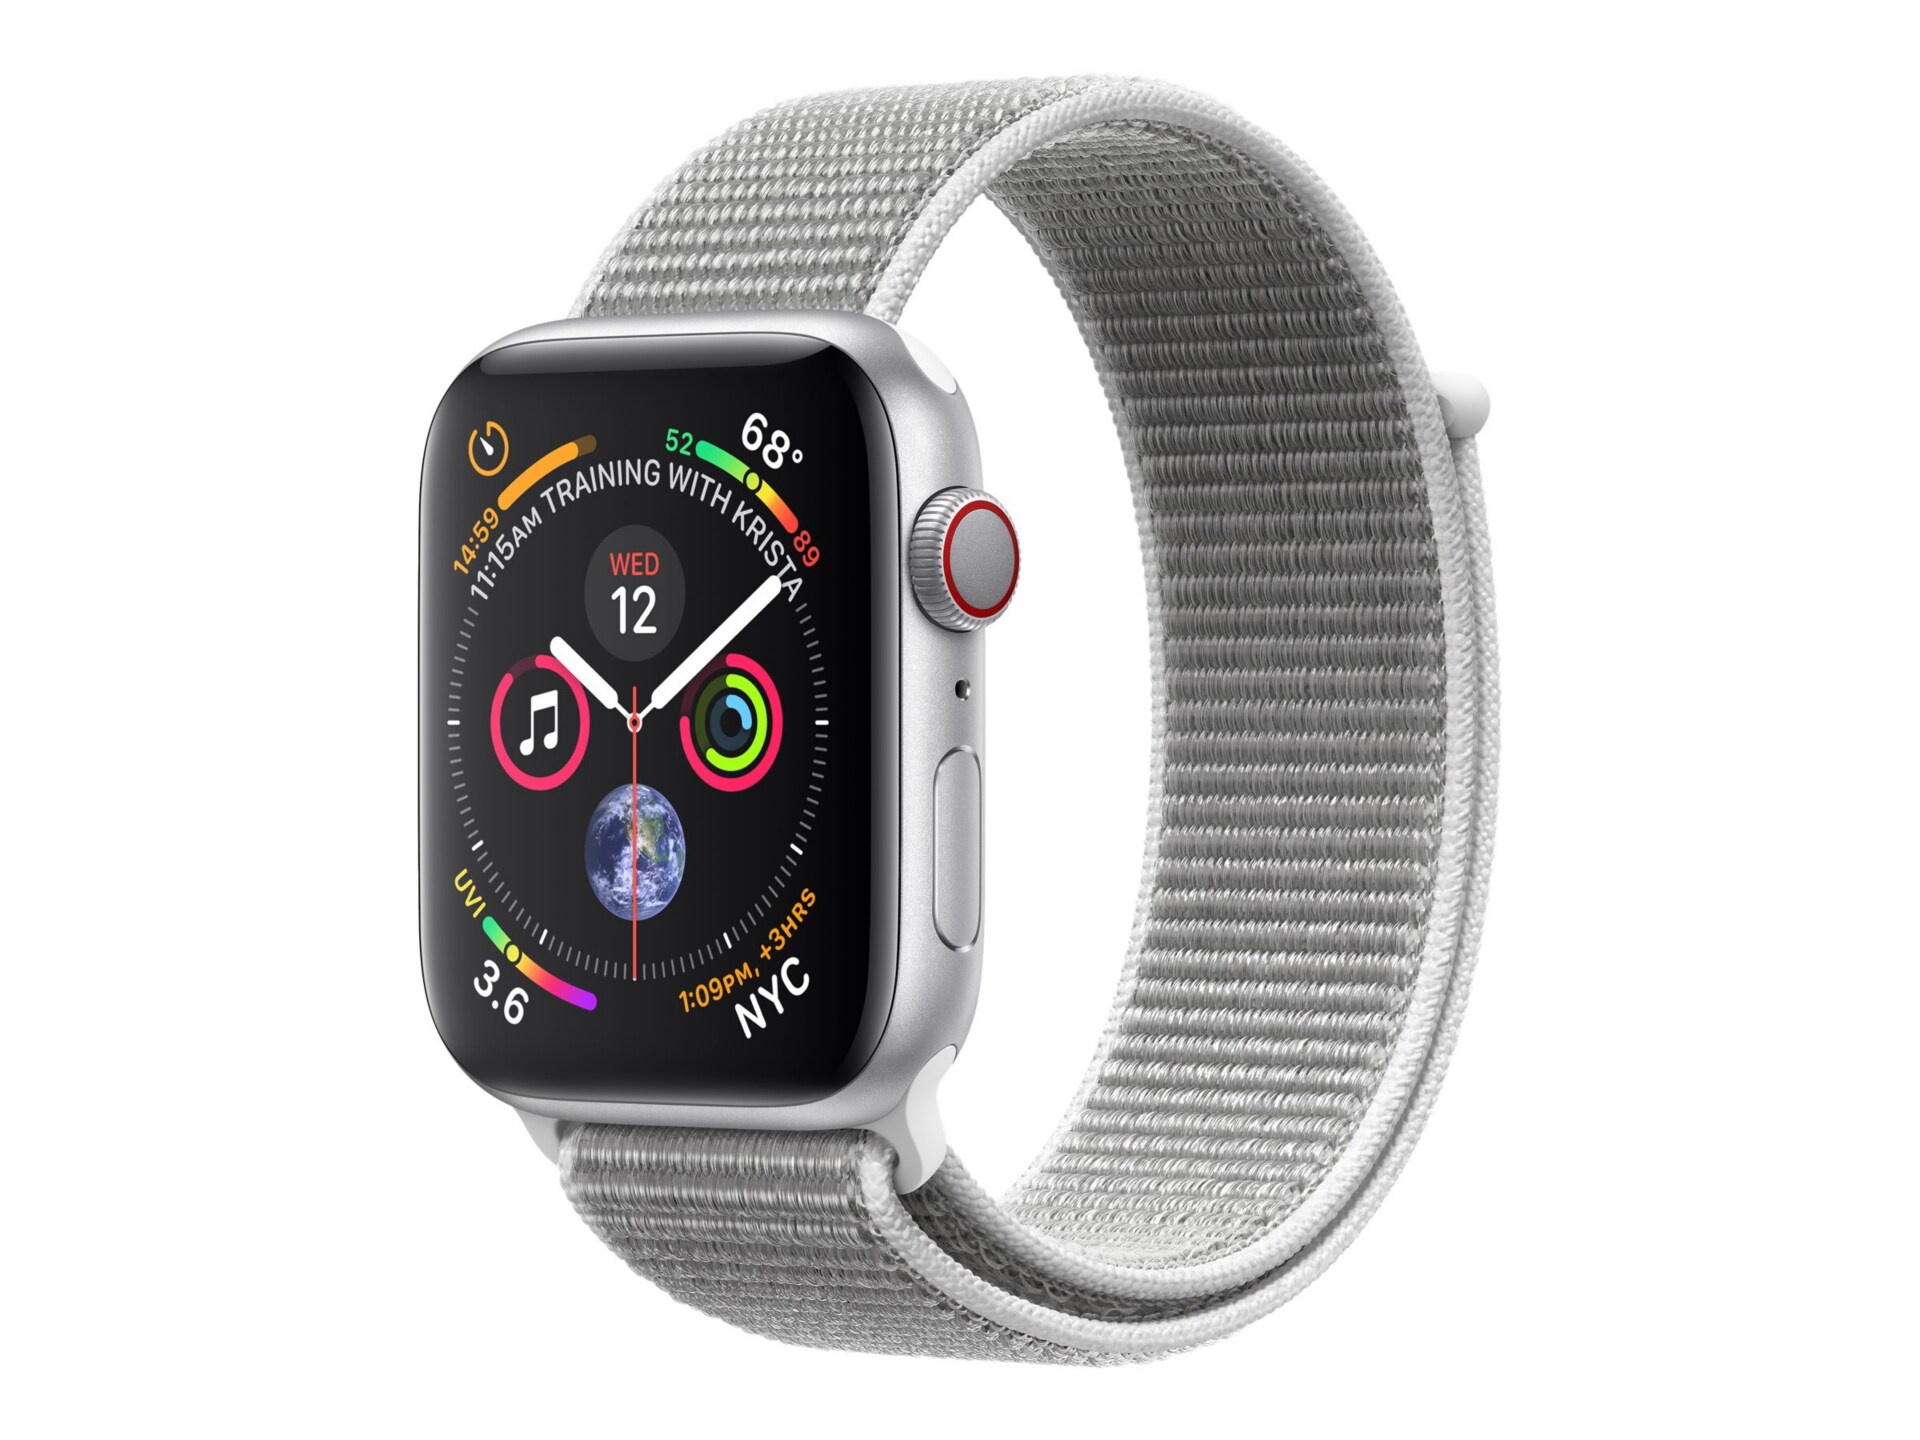 apple watch aluminum